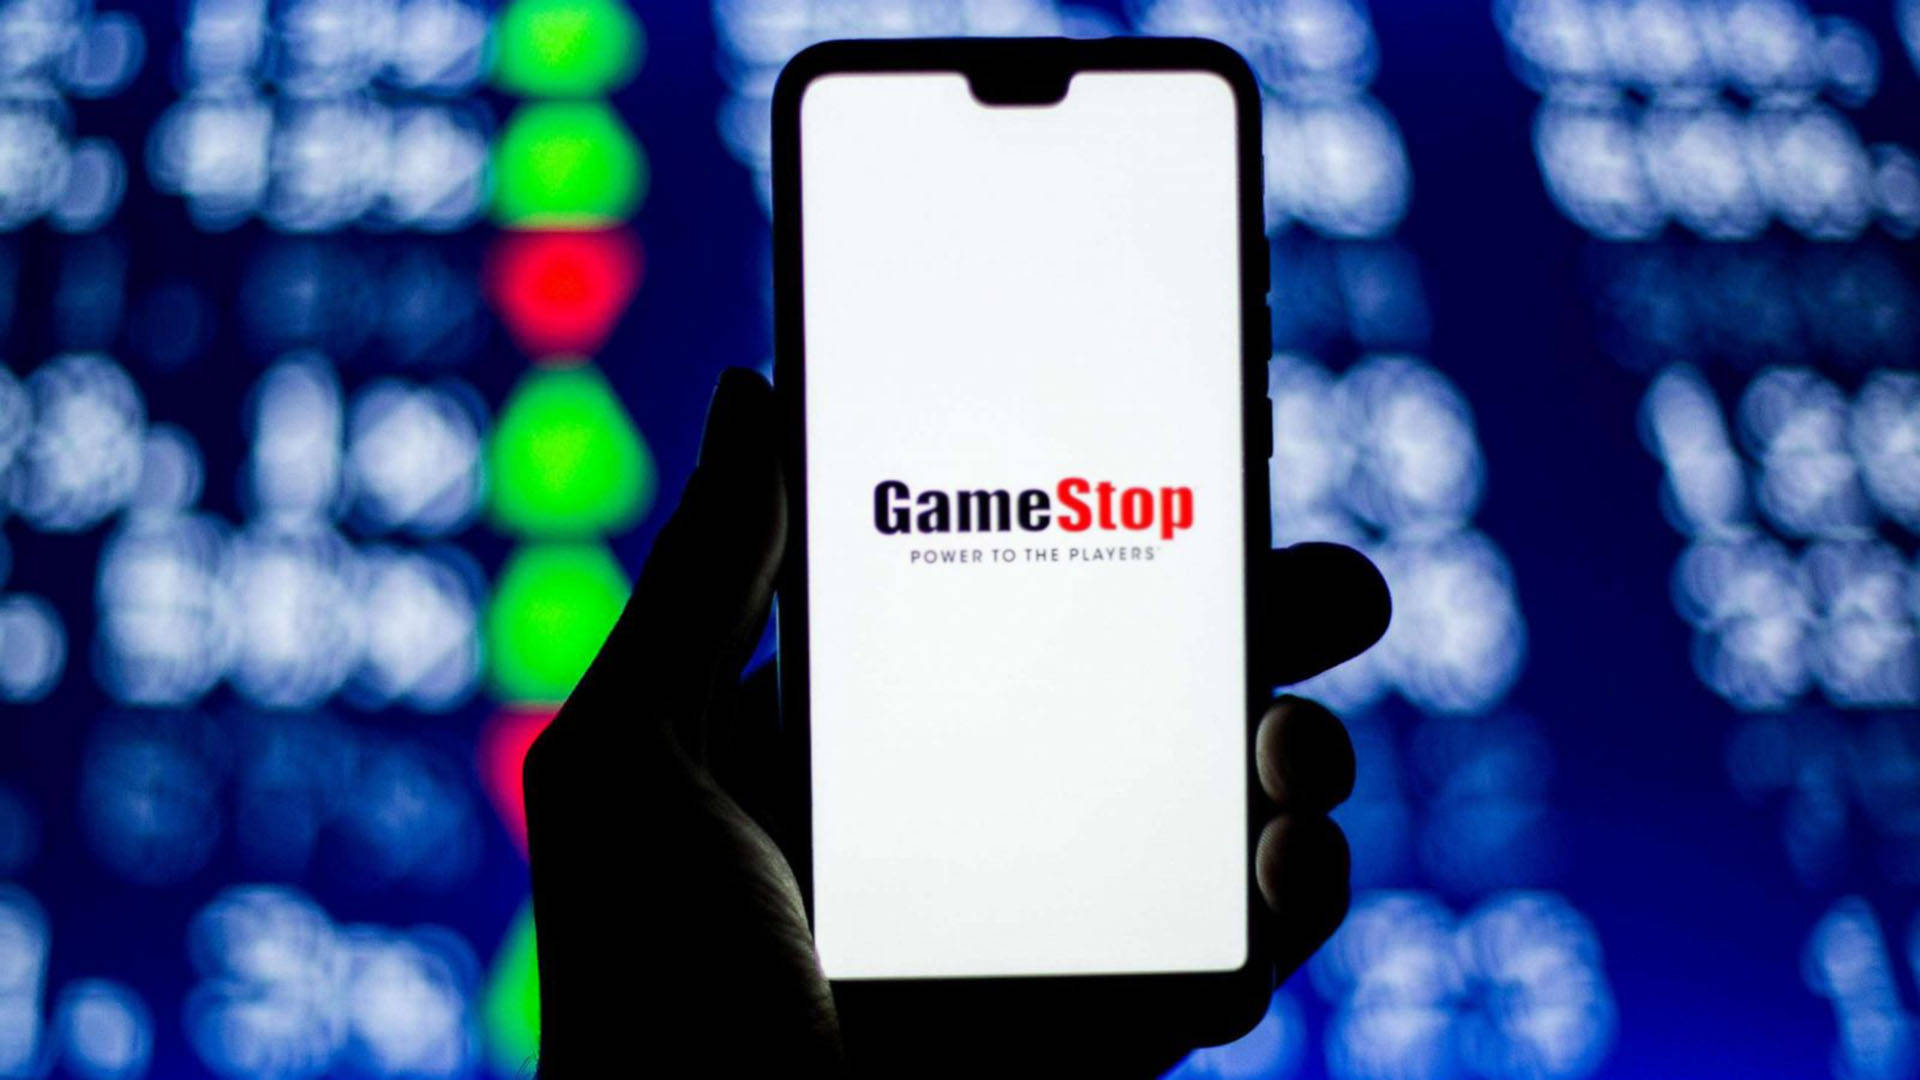 GameStop Phone Screen Illustration Background